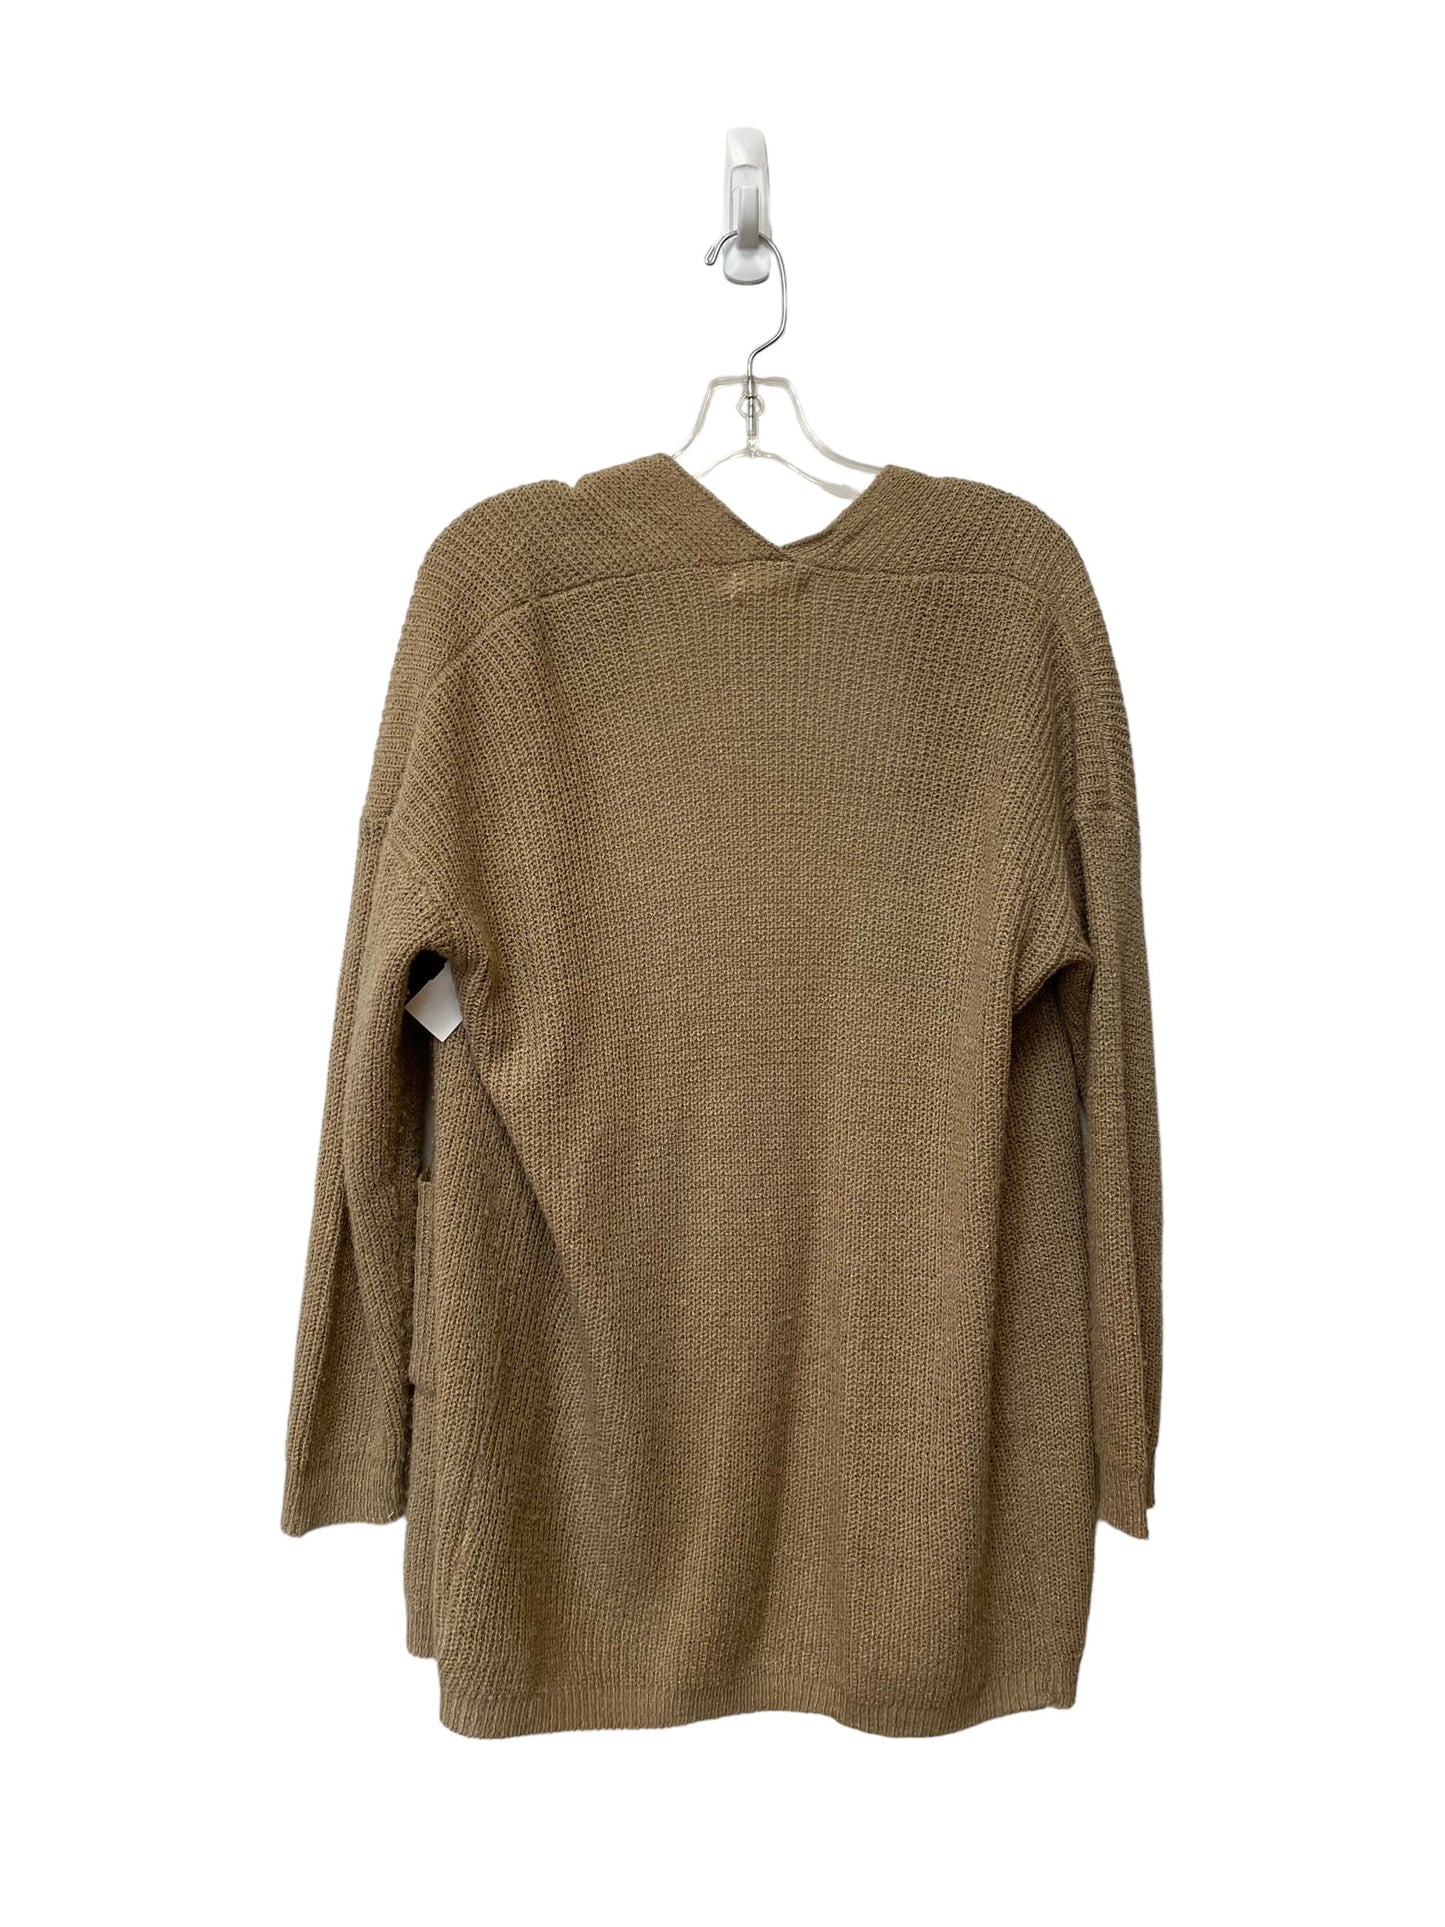 Tan Sweater Cardigan Dreamers, Size M